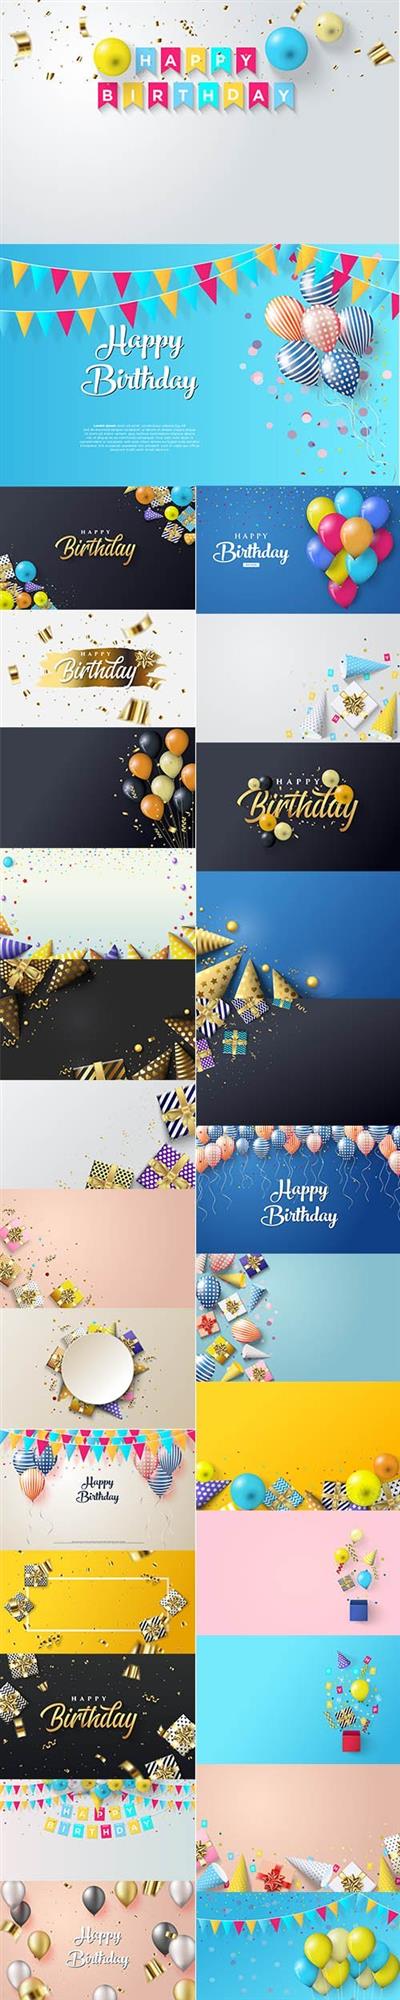 Birthday Party with Gift Box Premium Illustrations Set